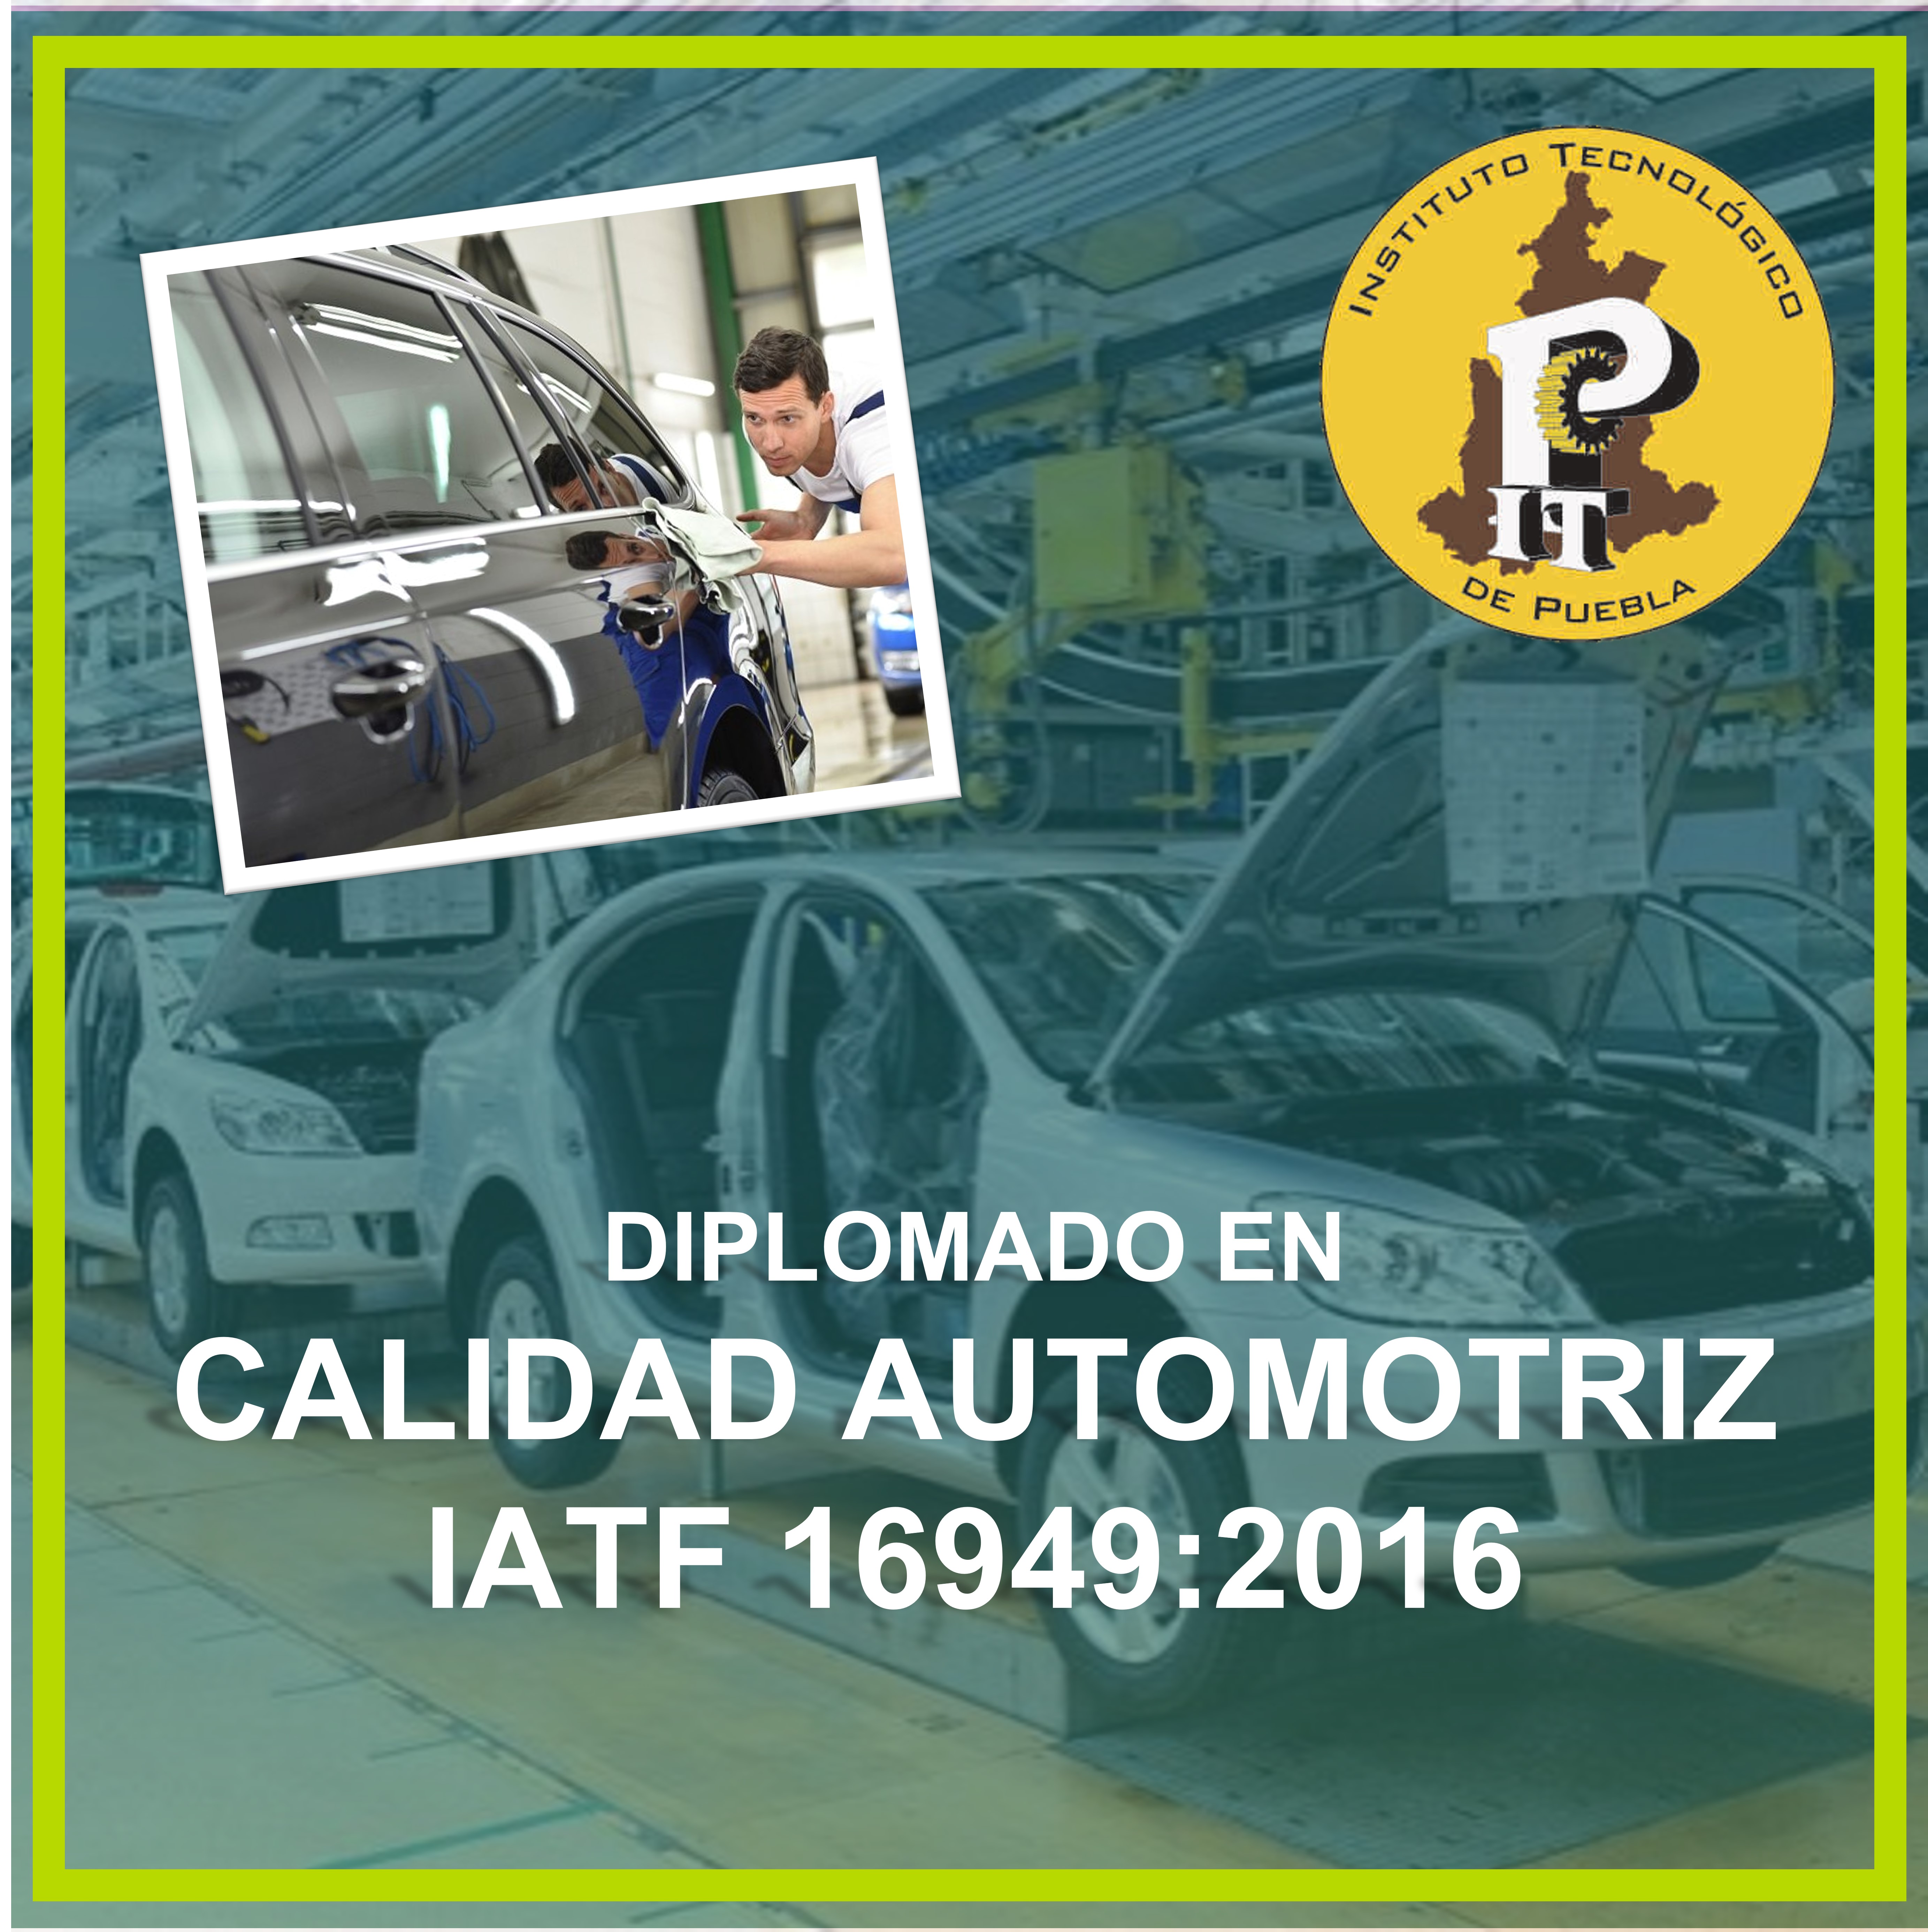 CALIDAD AUTOMOTRIZ IATF 16949:2016 B32